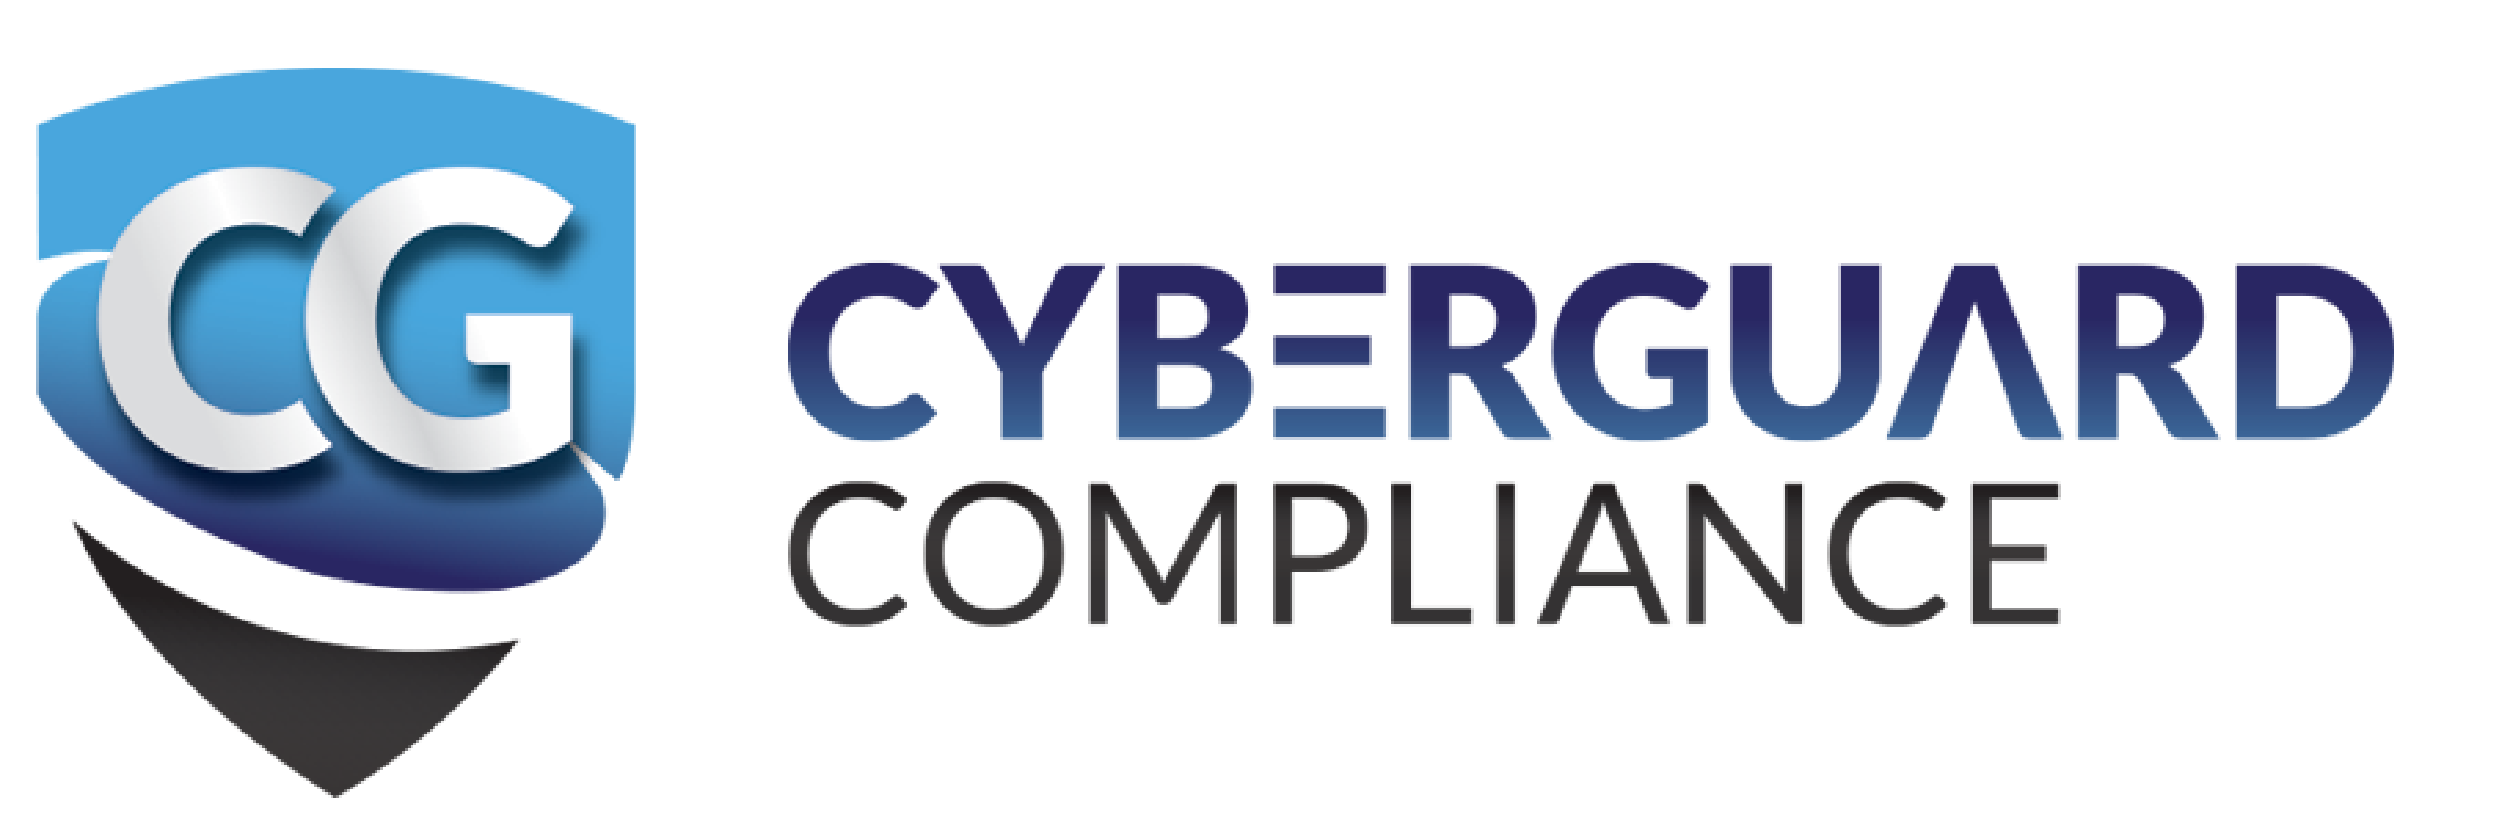 CyberGuard Compliance